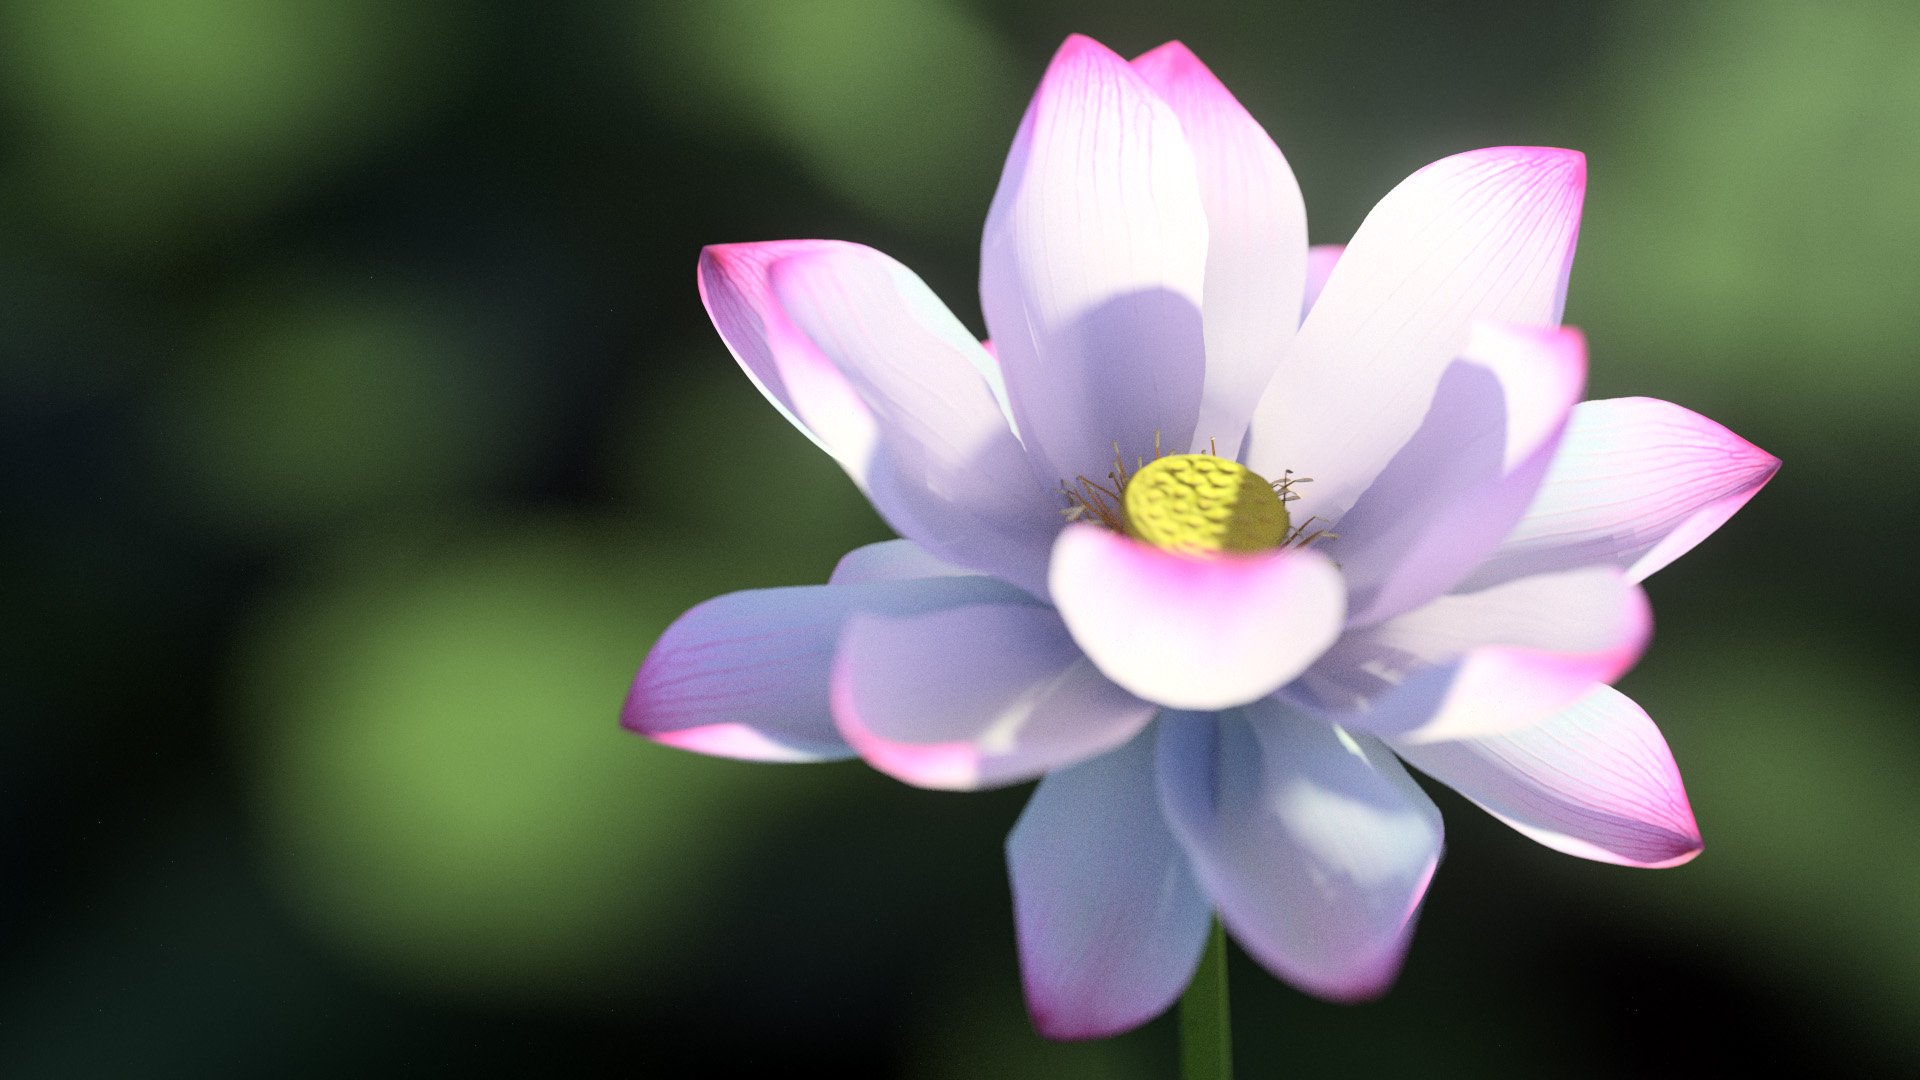 3D model of the Sacred lotus Nelumbo nucifera